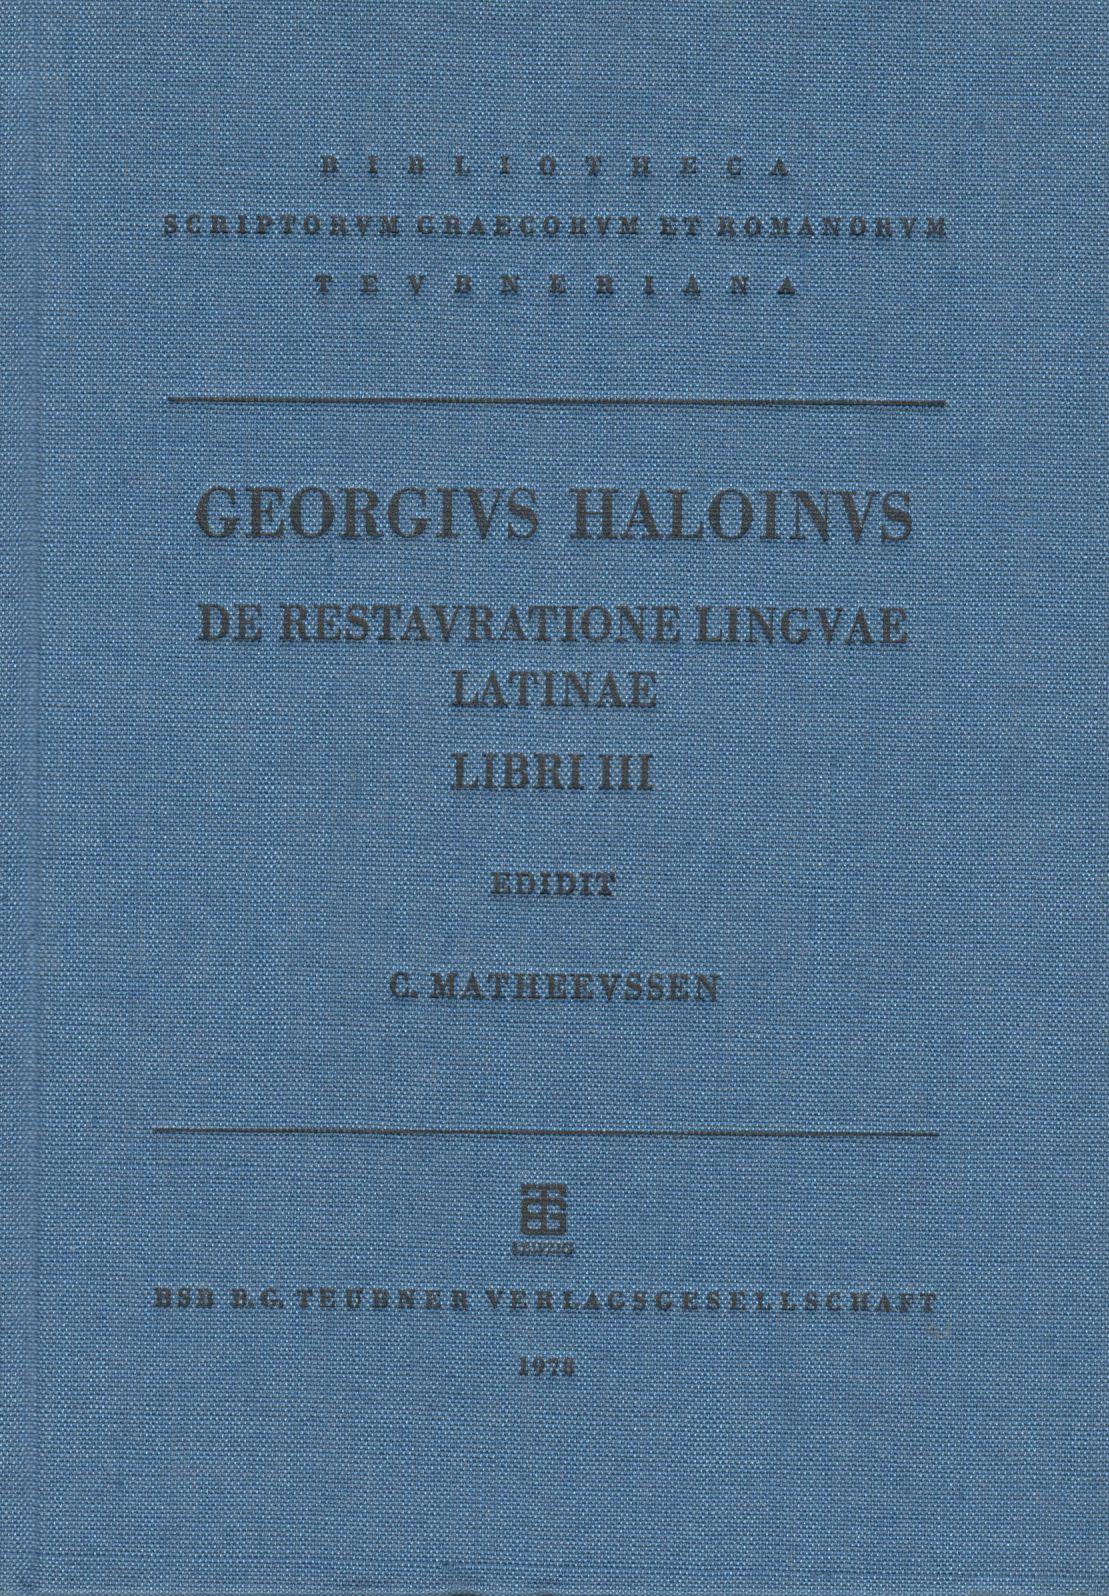 GEORGII HALOINI COMINIIQVE DOMINI DE RESTAURATIONE LINGUAE LATINAE LIBRI III